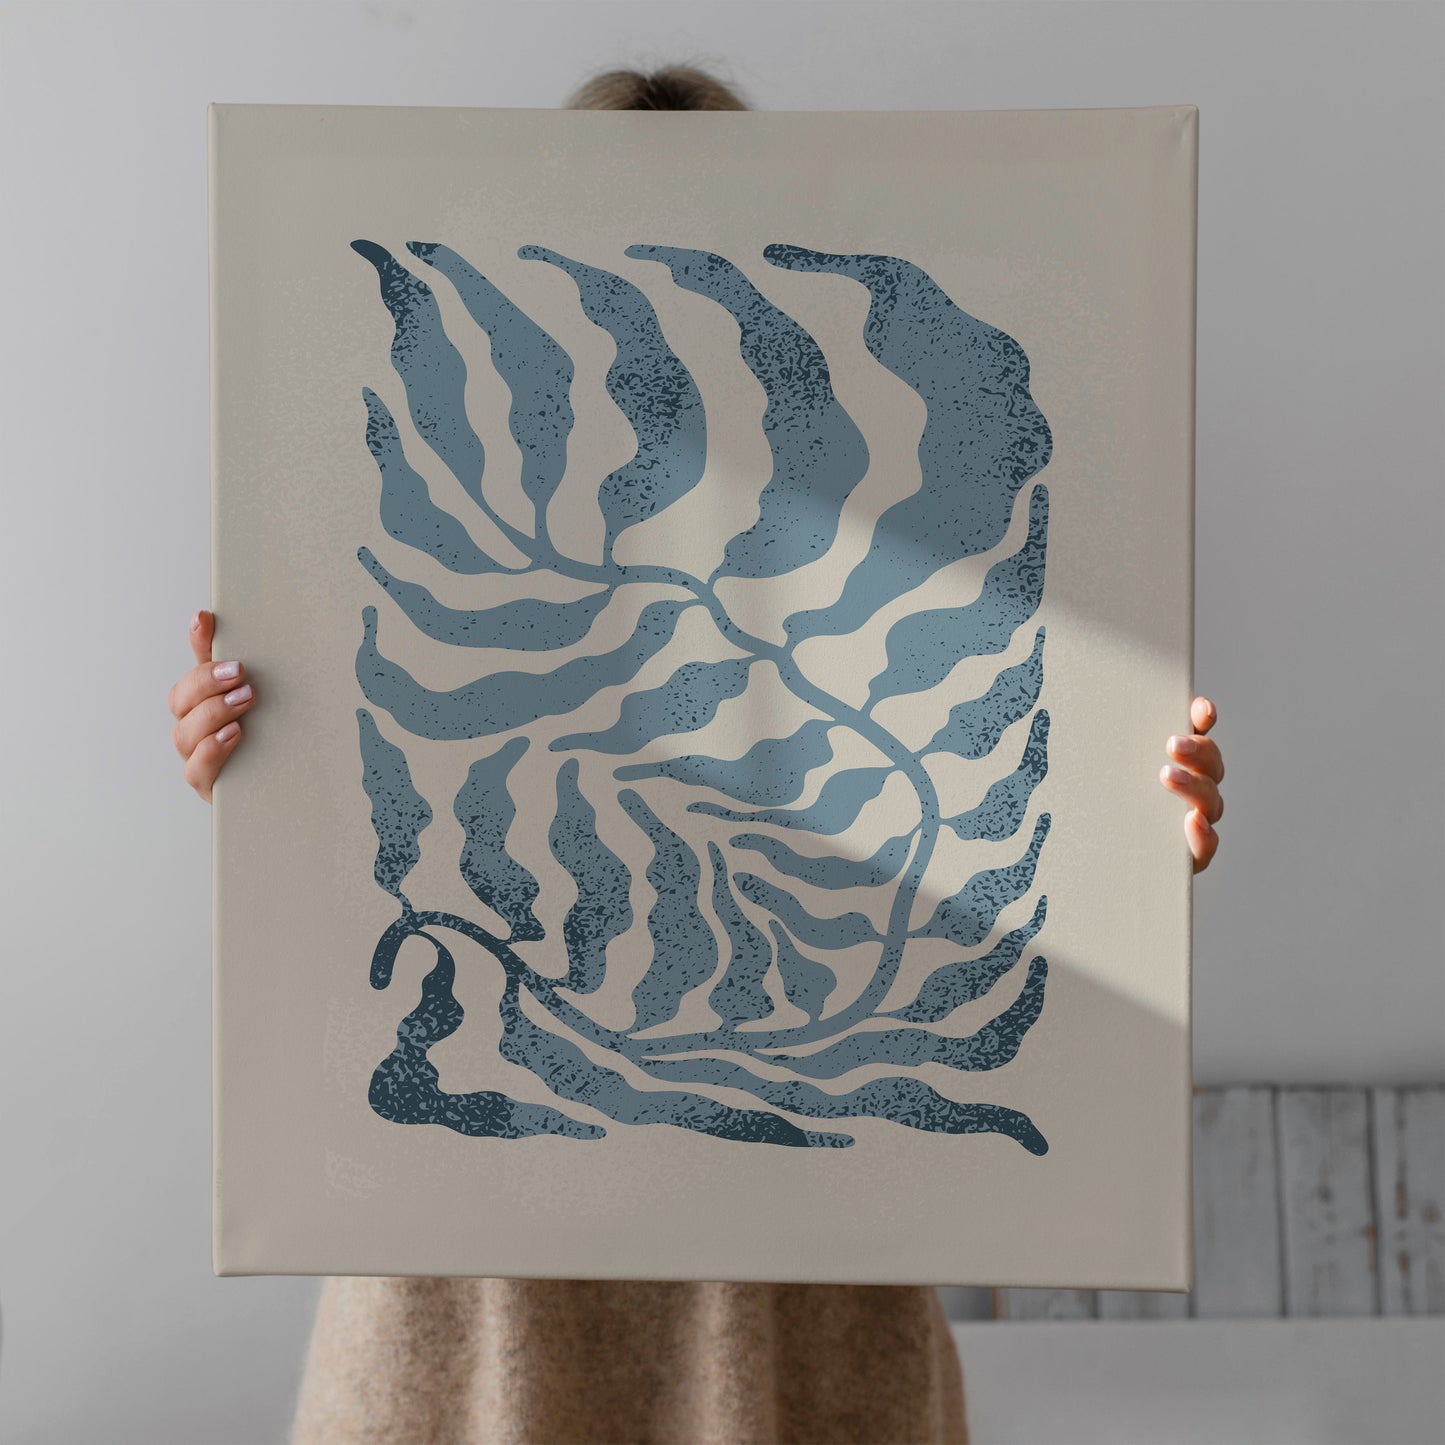 Blue Leaf Canvas Print